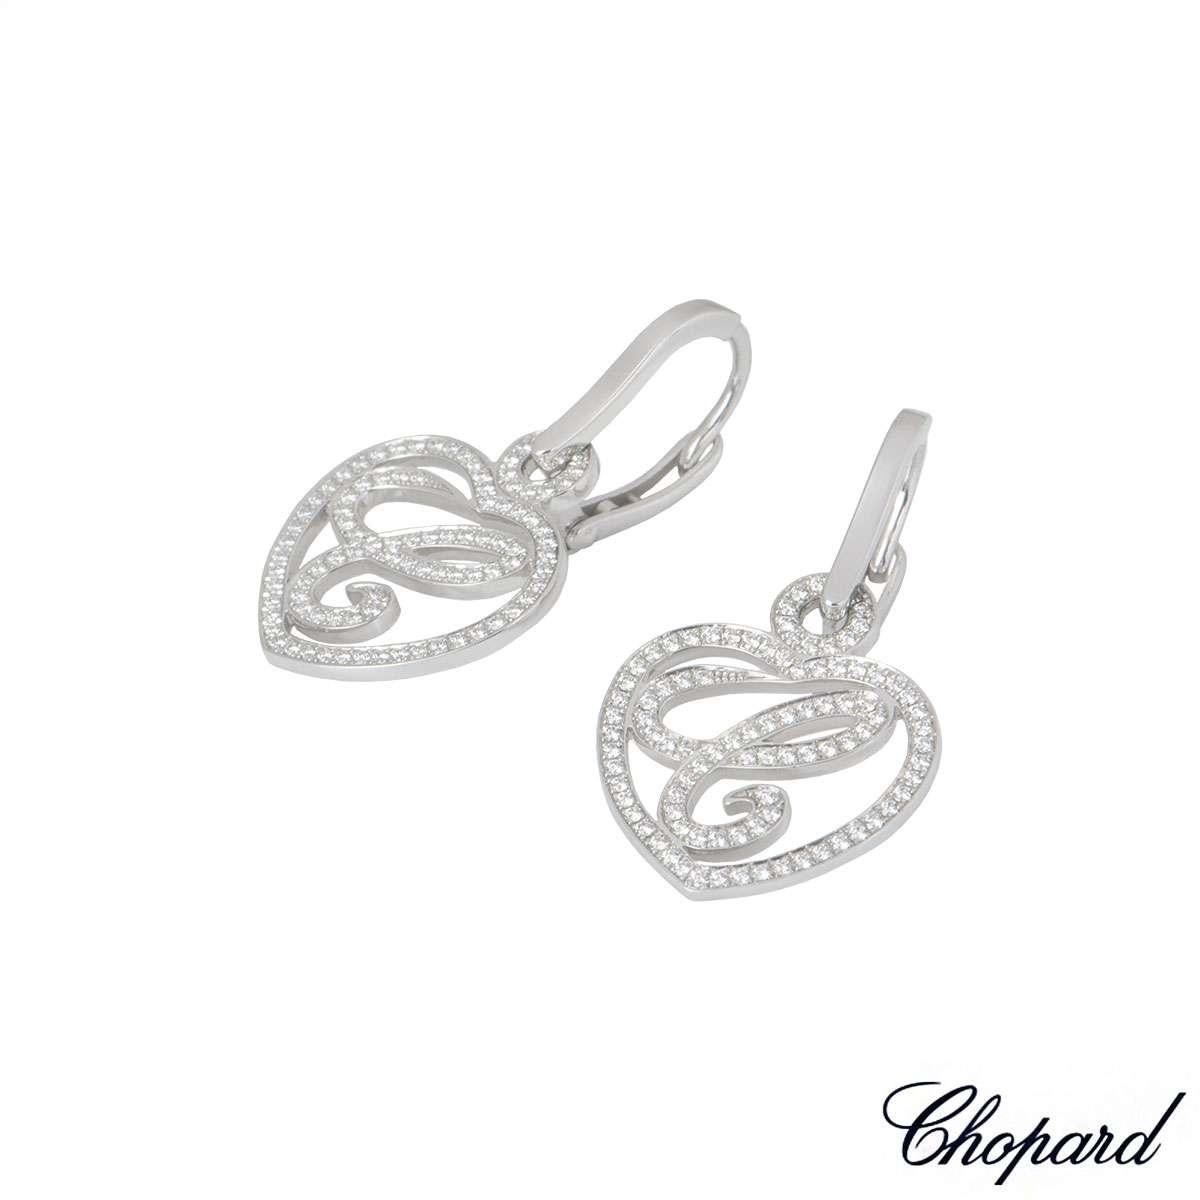 Round Cut Chopard White Gold Happy Diamonds Earrings 837223-1001